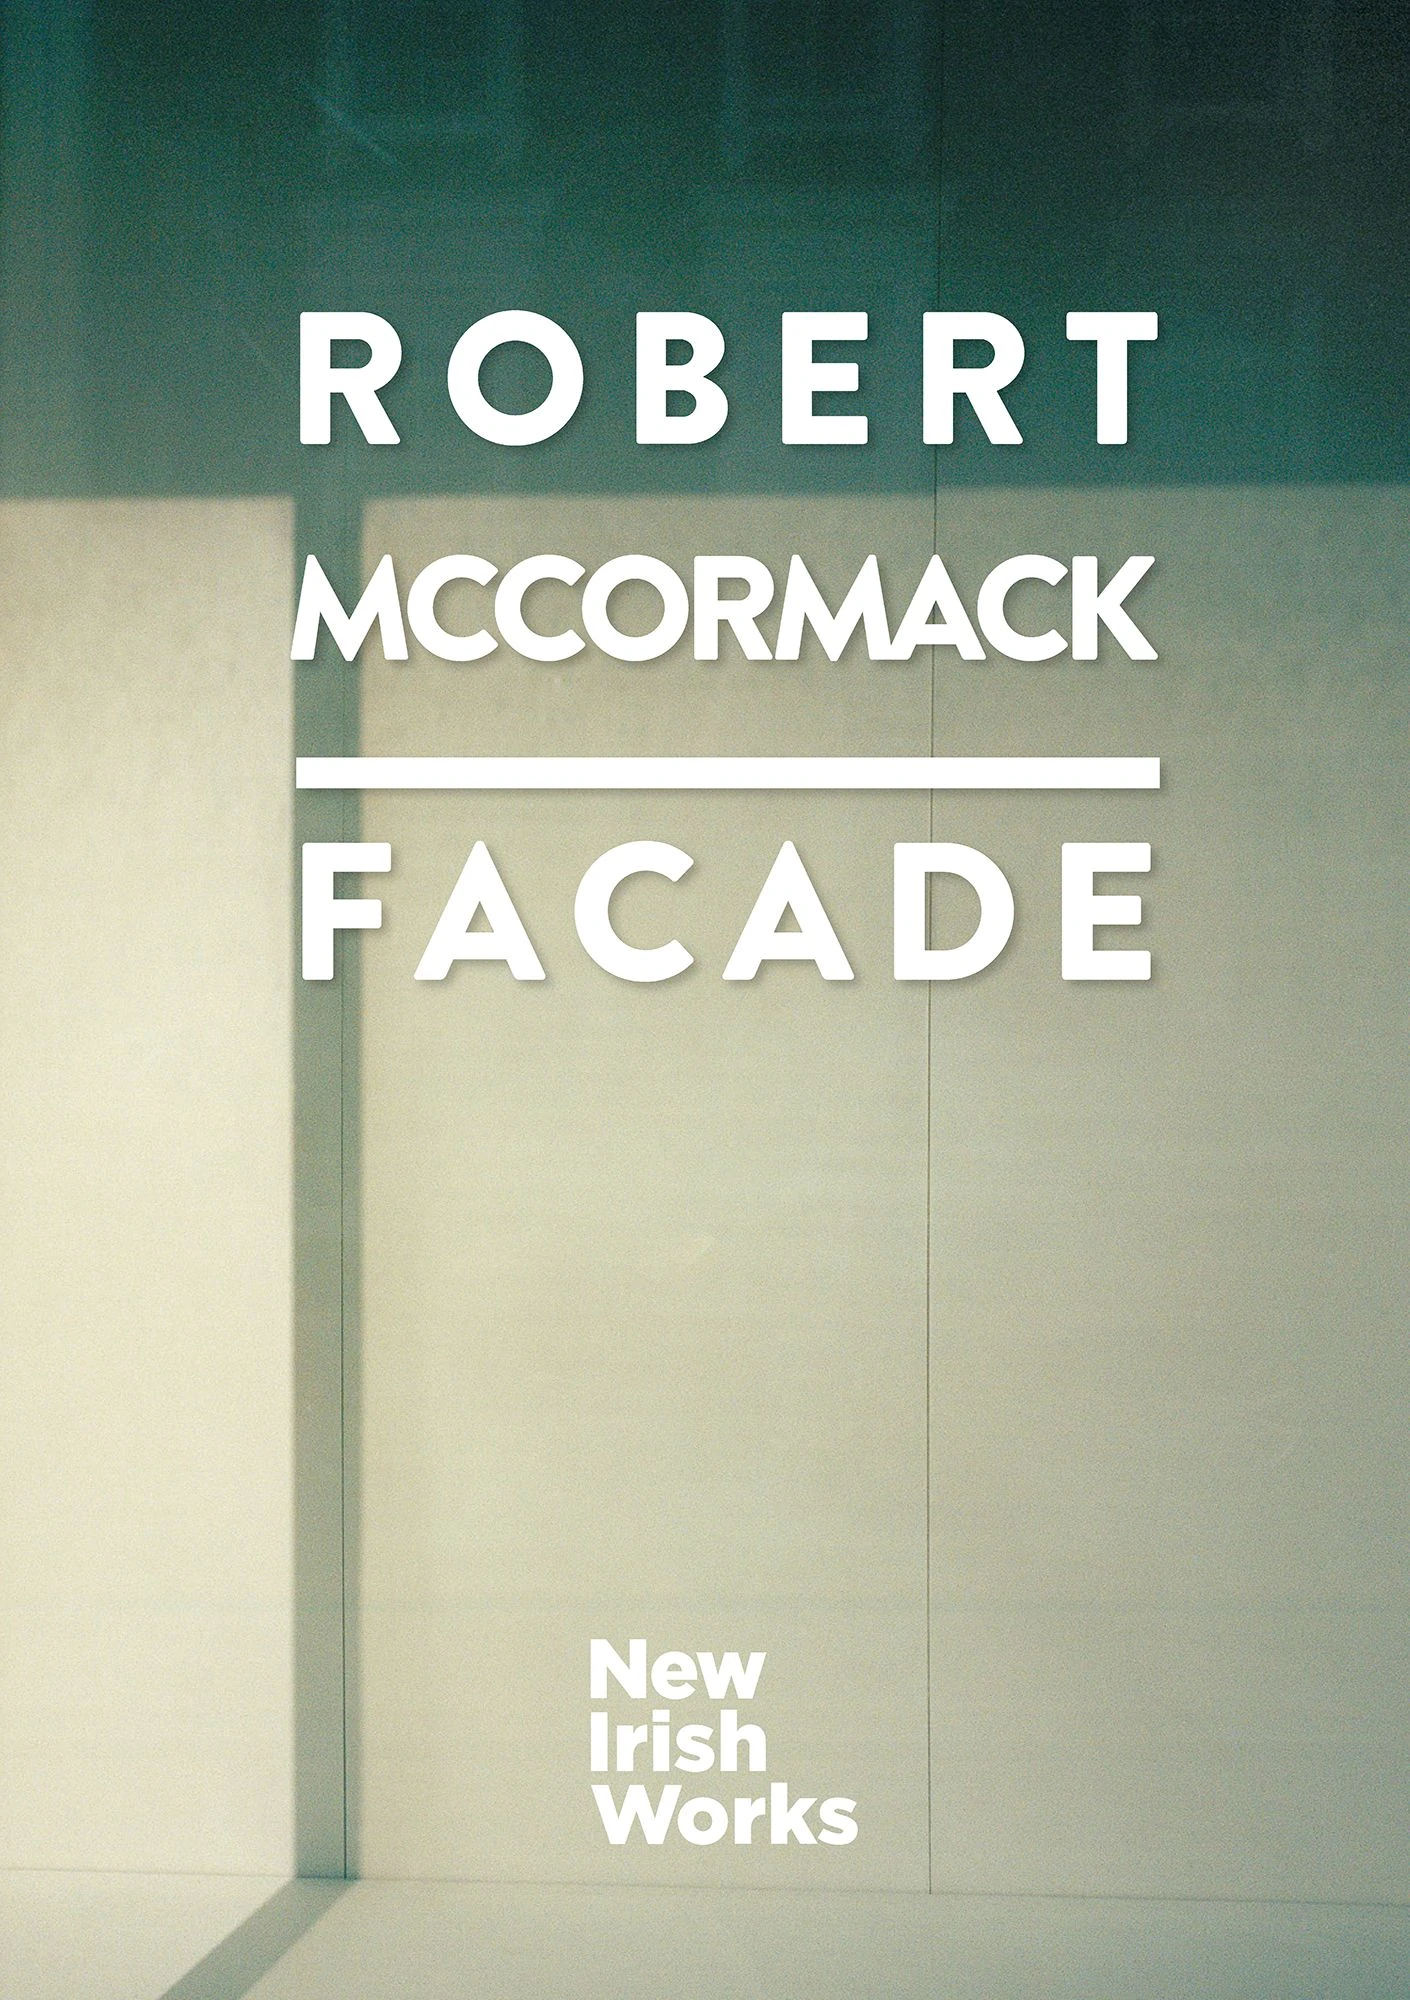 New Irish Works: Facade Robert McCormack